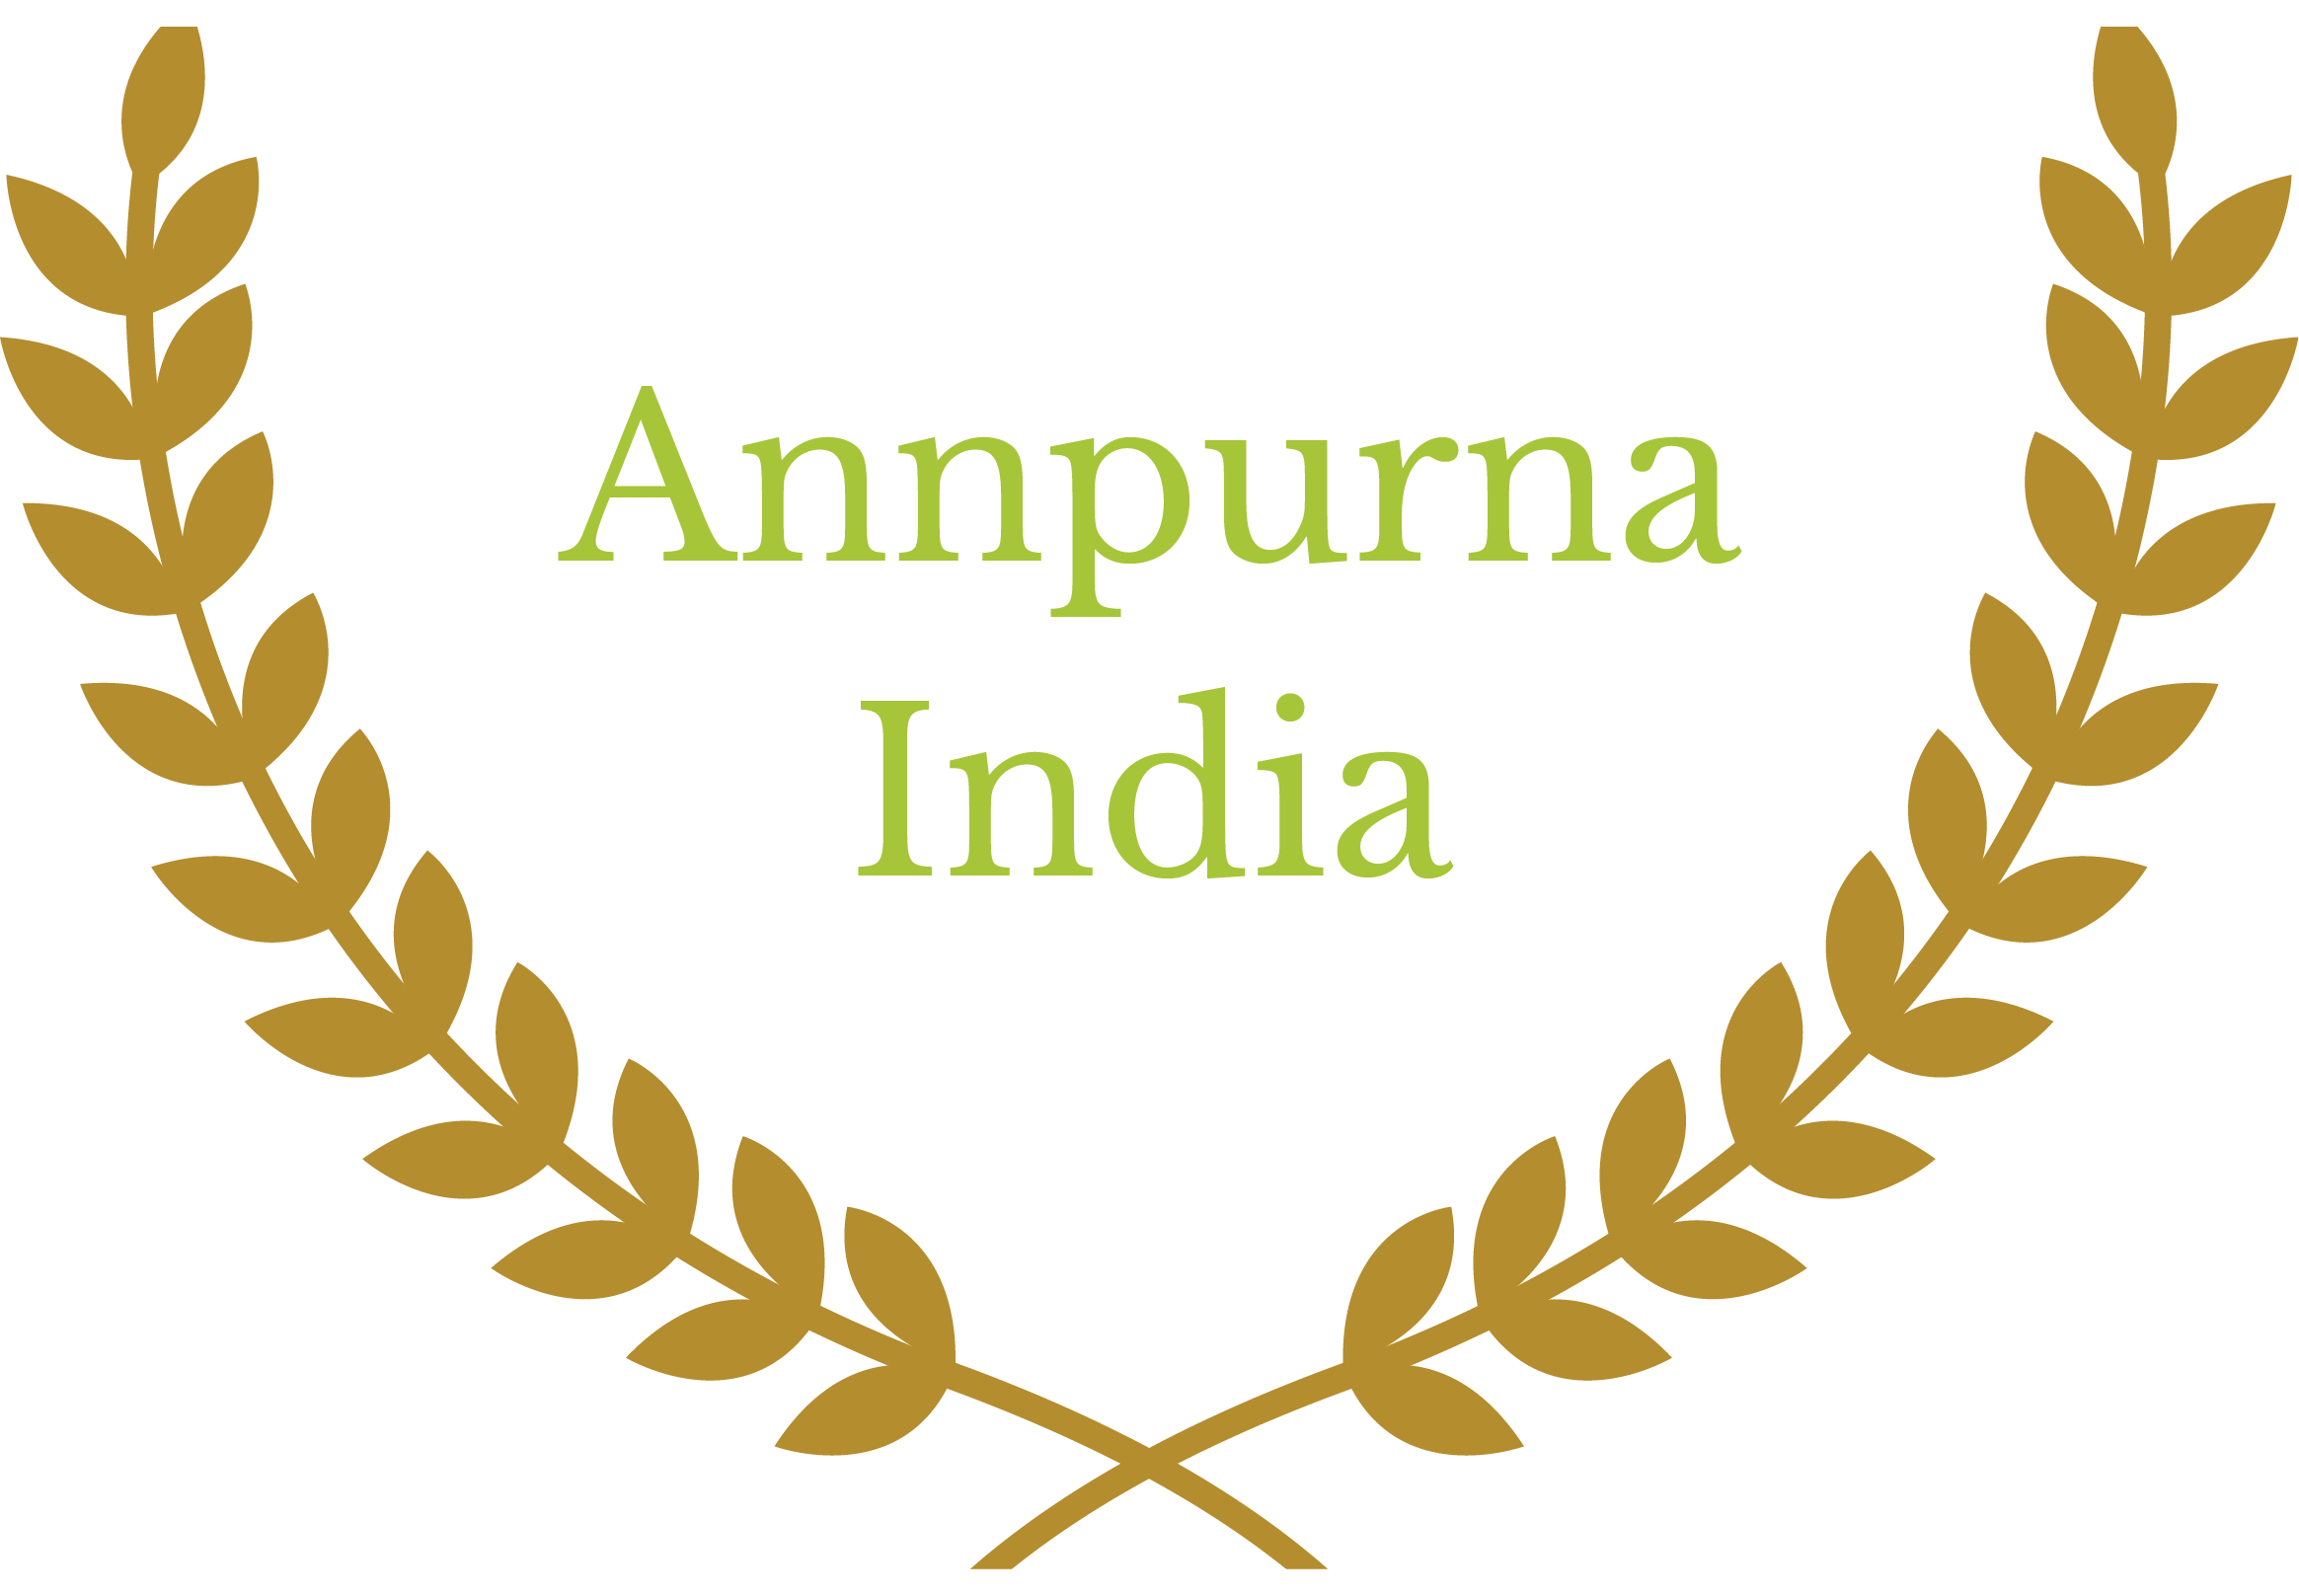 Annpurna India